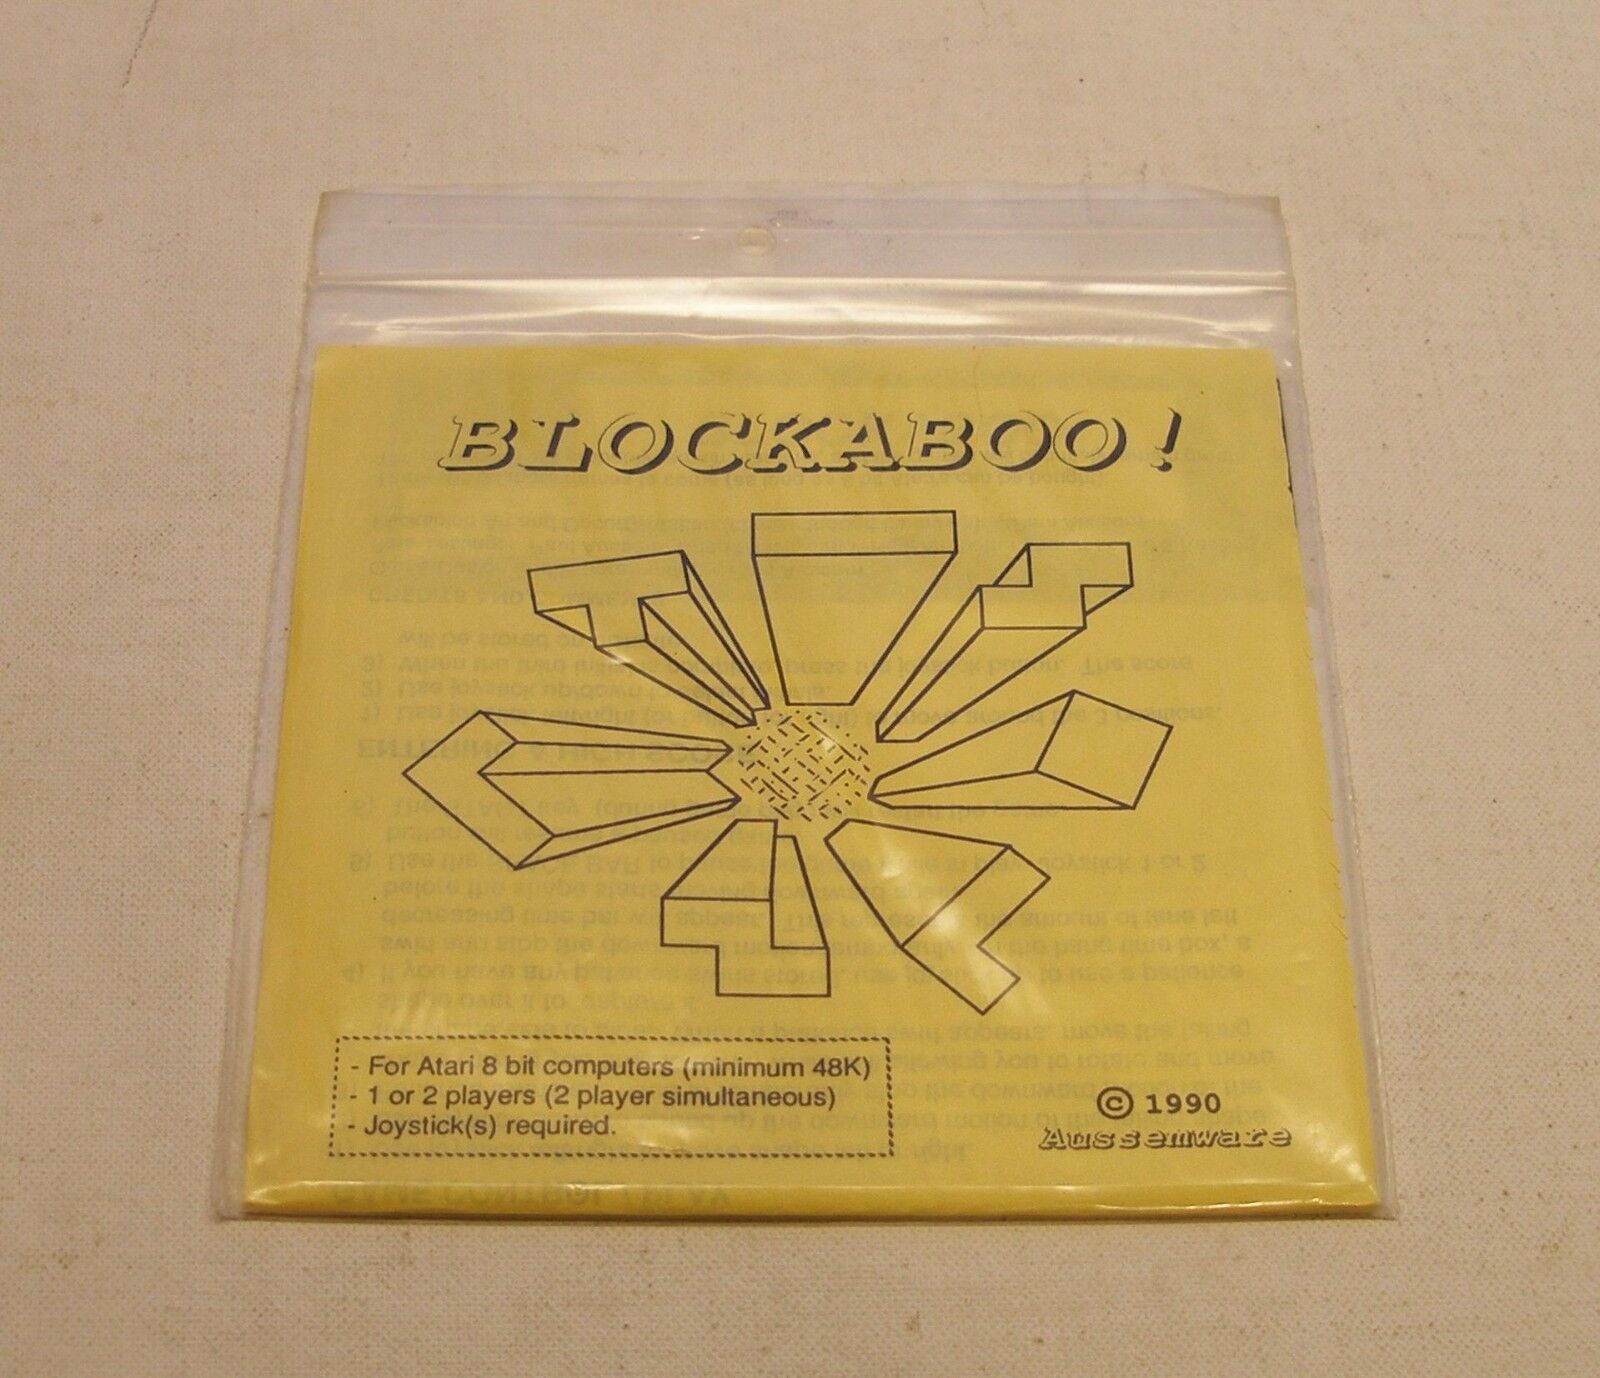 VERY RARE GAME: Blockaboo by Aussemware for Atari 400/800 - NEW (Rarity 9)